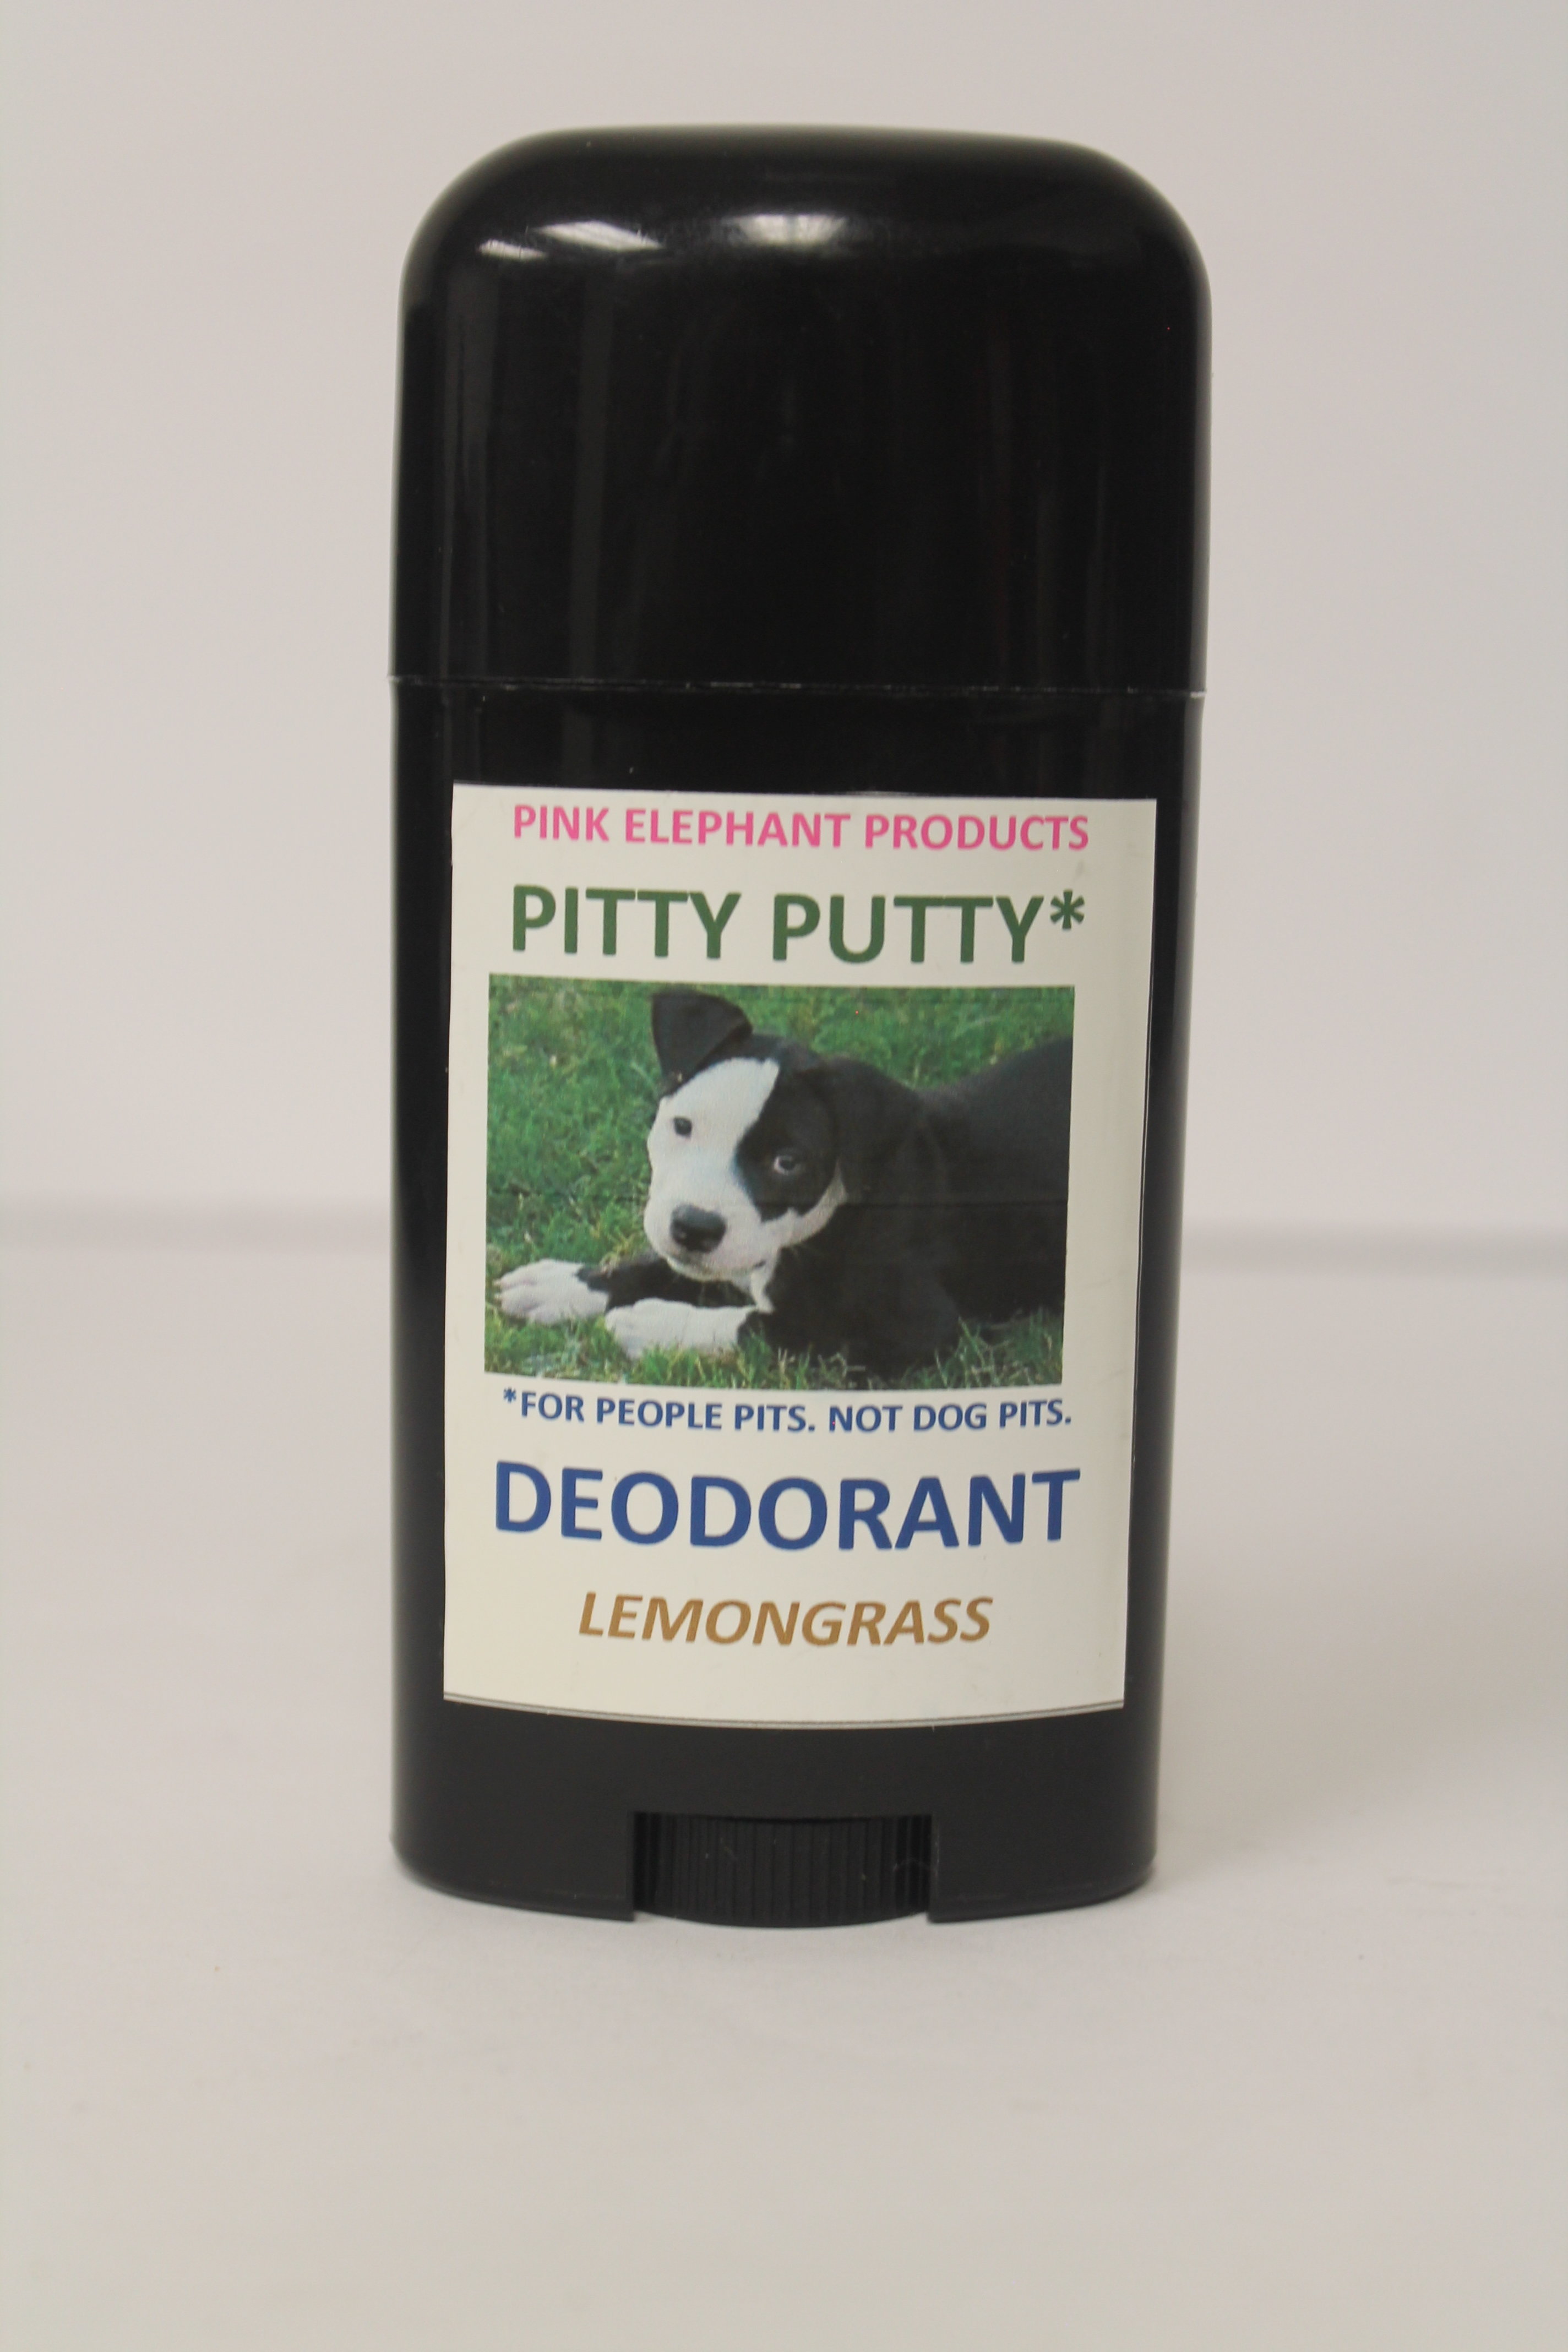 Pink Elephant "Pitty Putty" Deodorant Lemongrass 00222